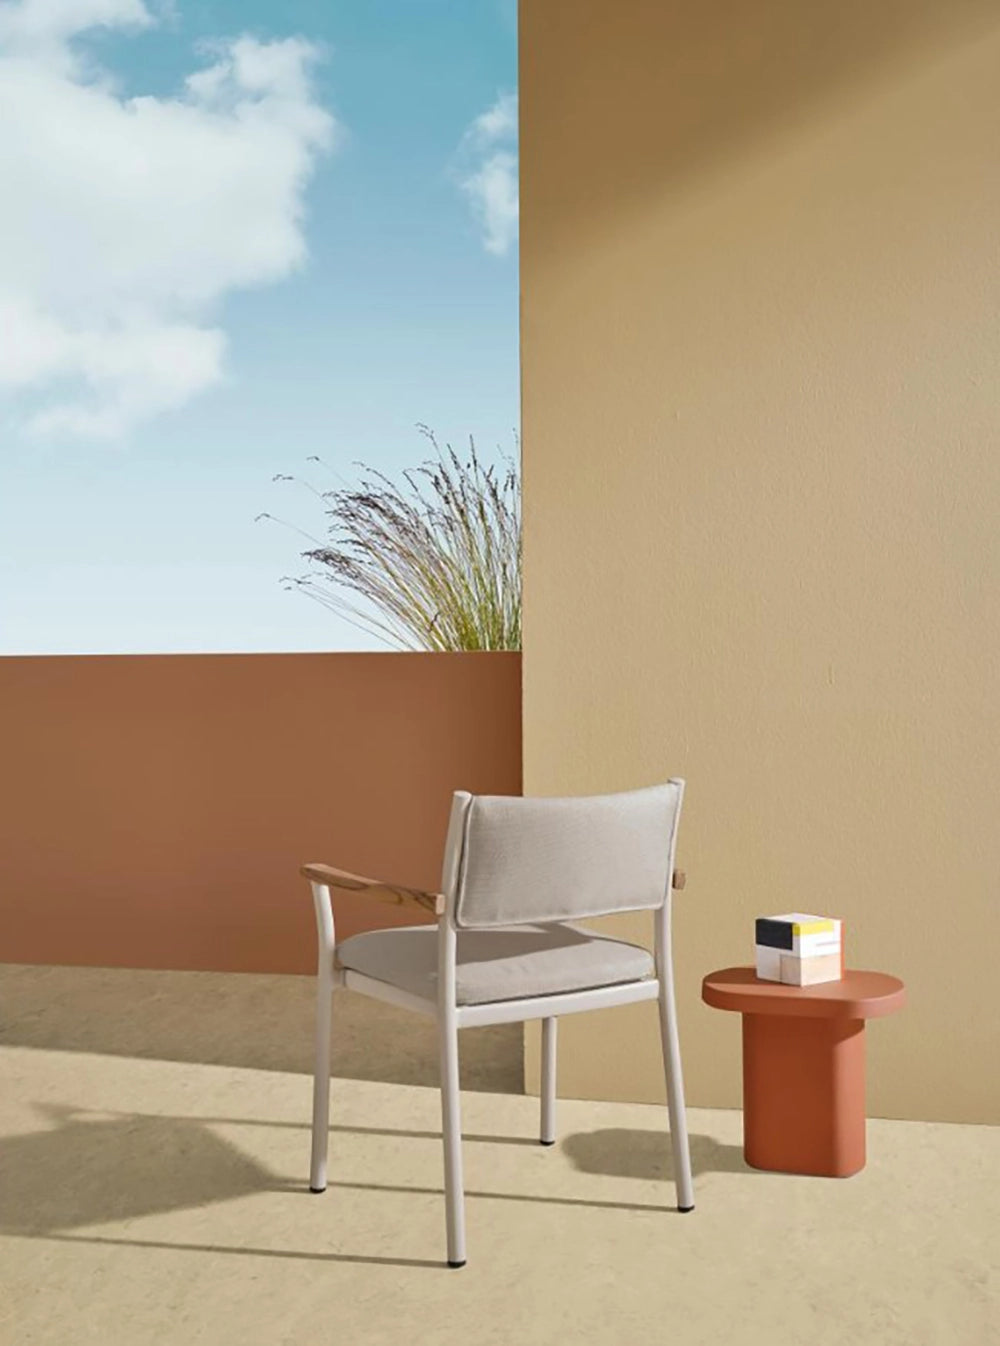 Caementum Monobloc Coffee Table in Orange Finish with Lounge Armchair in Studio Setting 2